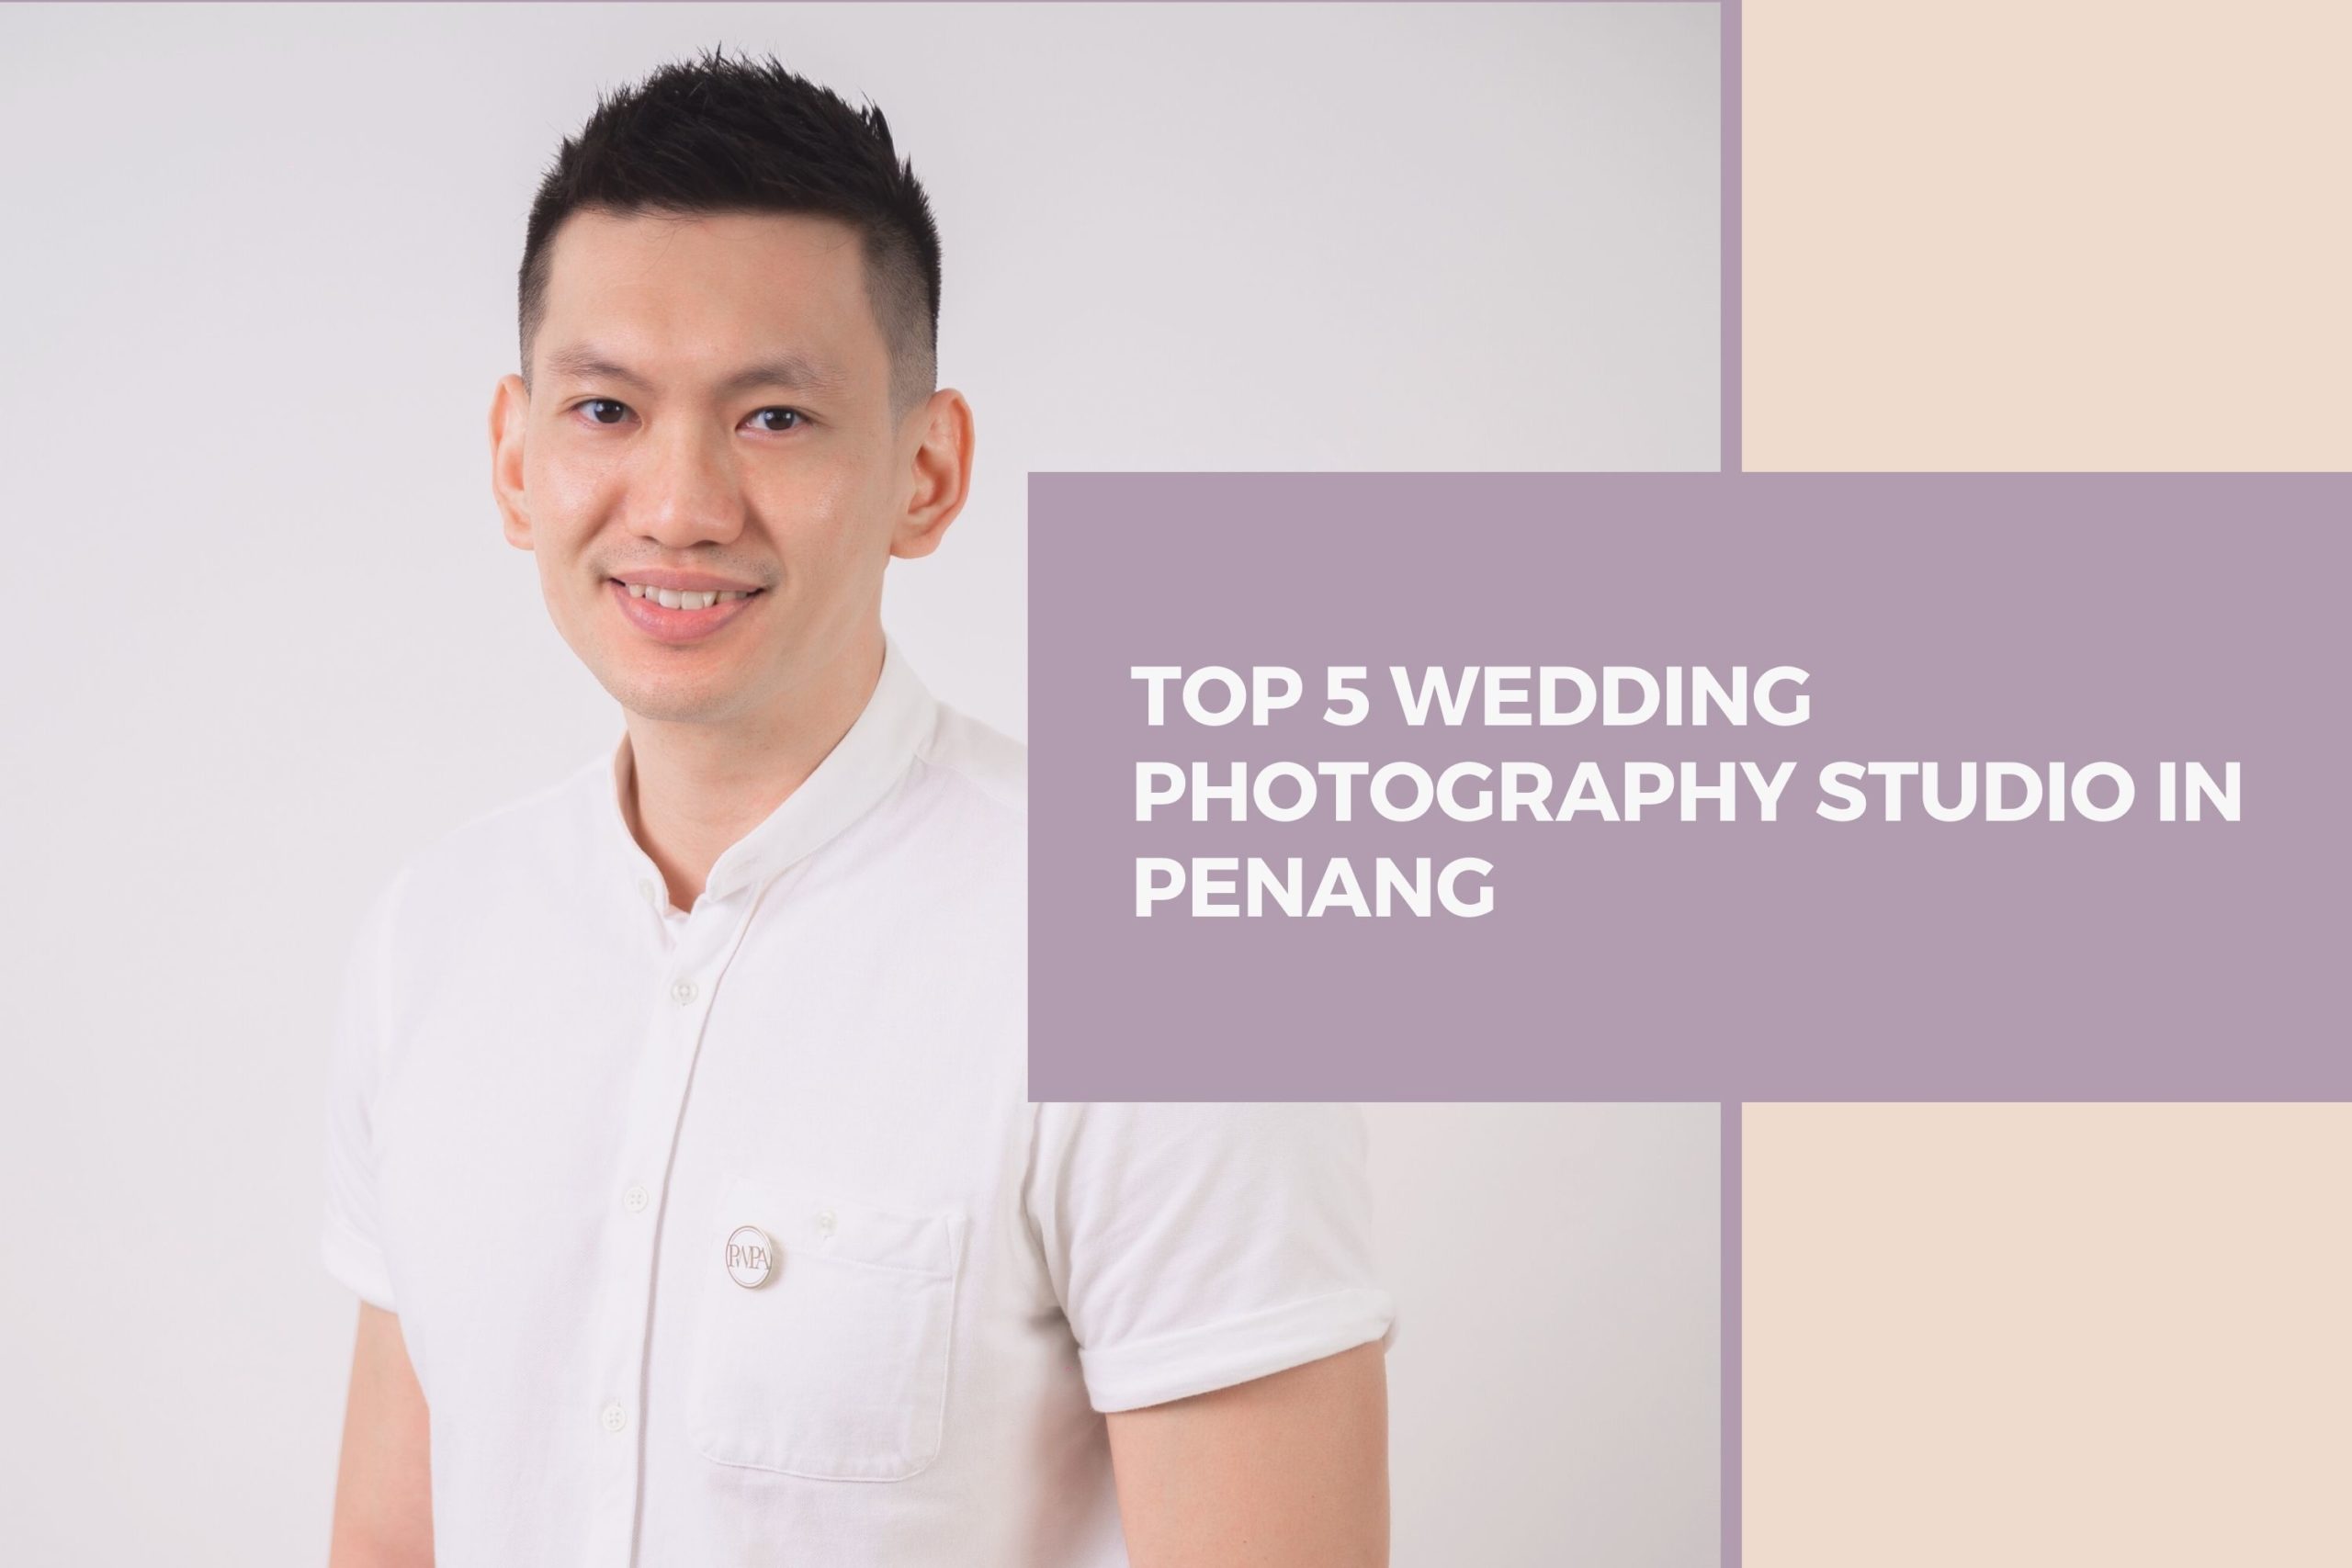 Top 5 Wedding Photography Studio In Penang